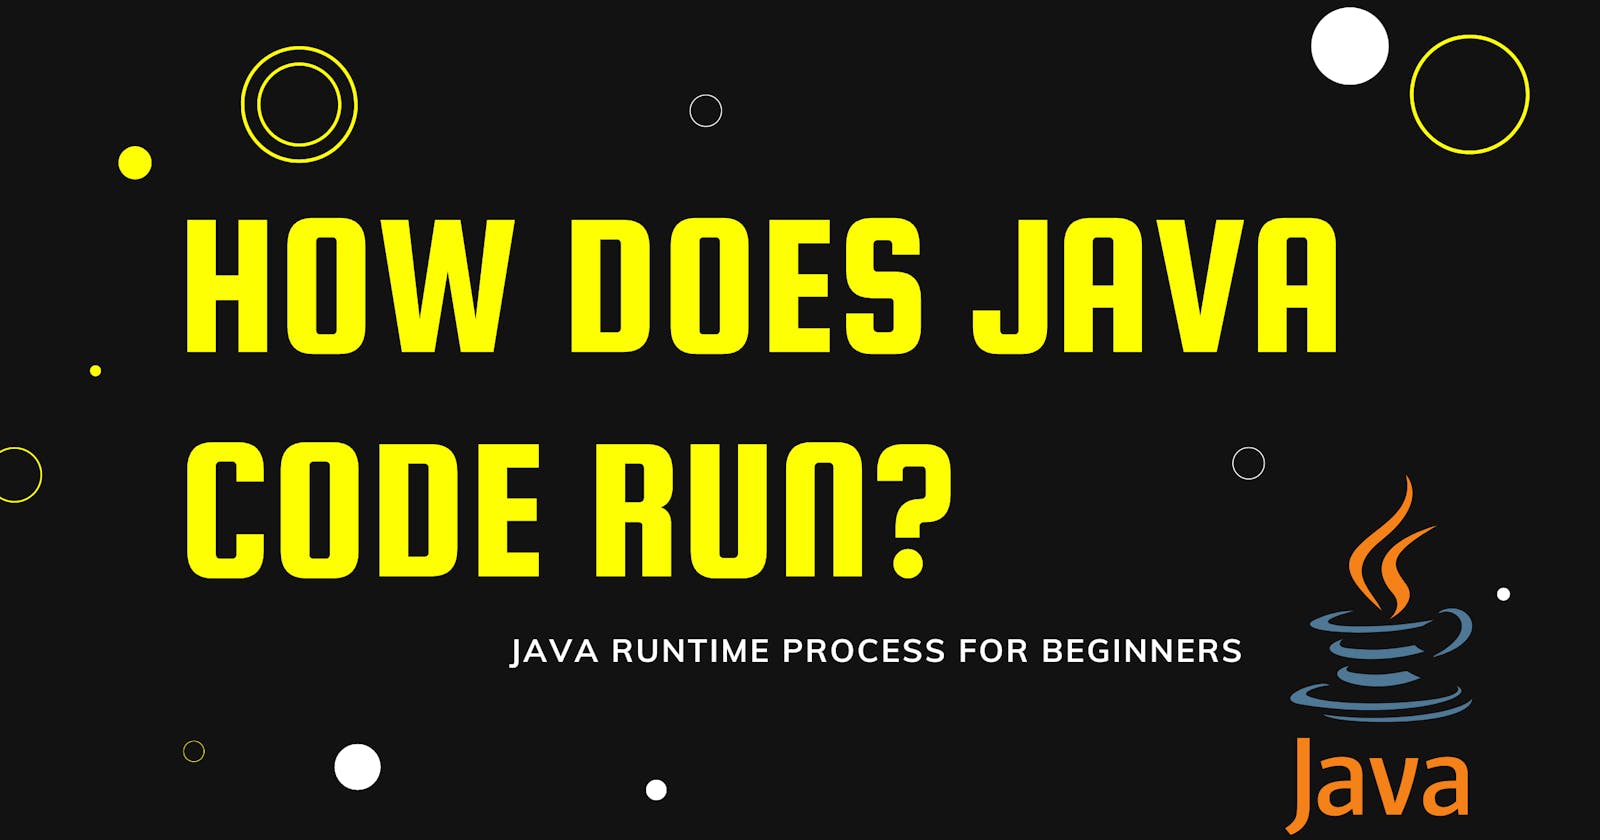 How Does Java Code Run?